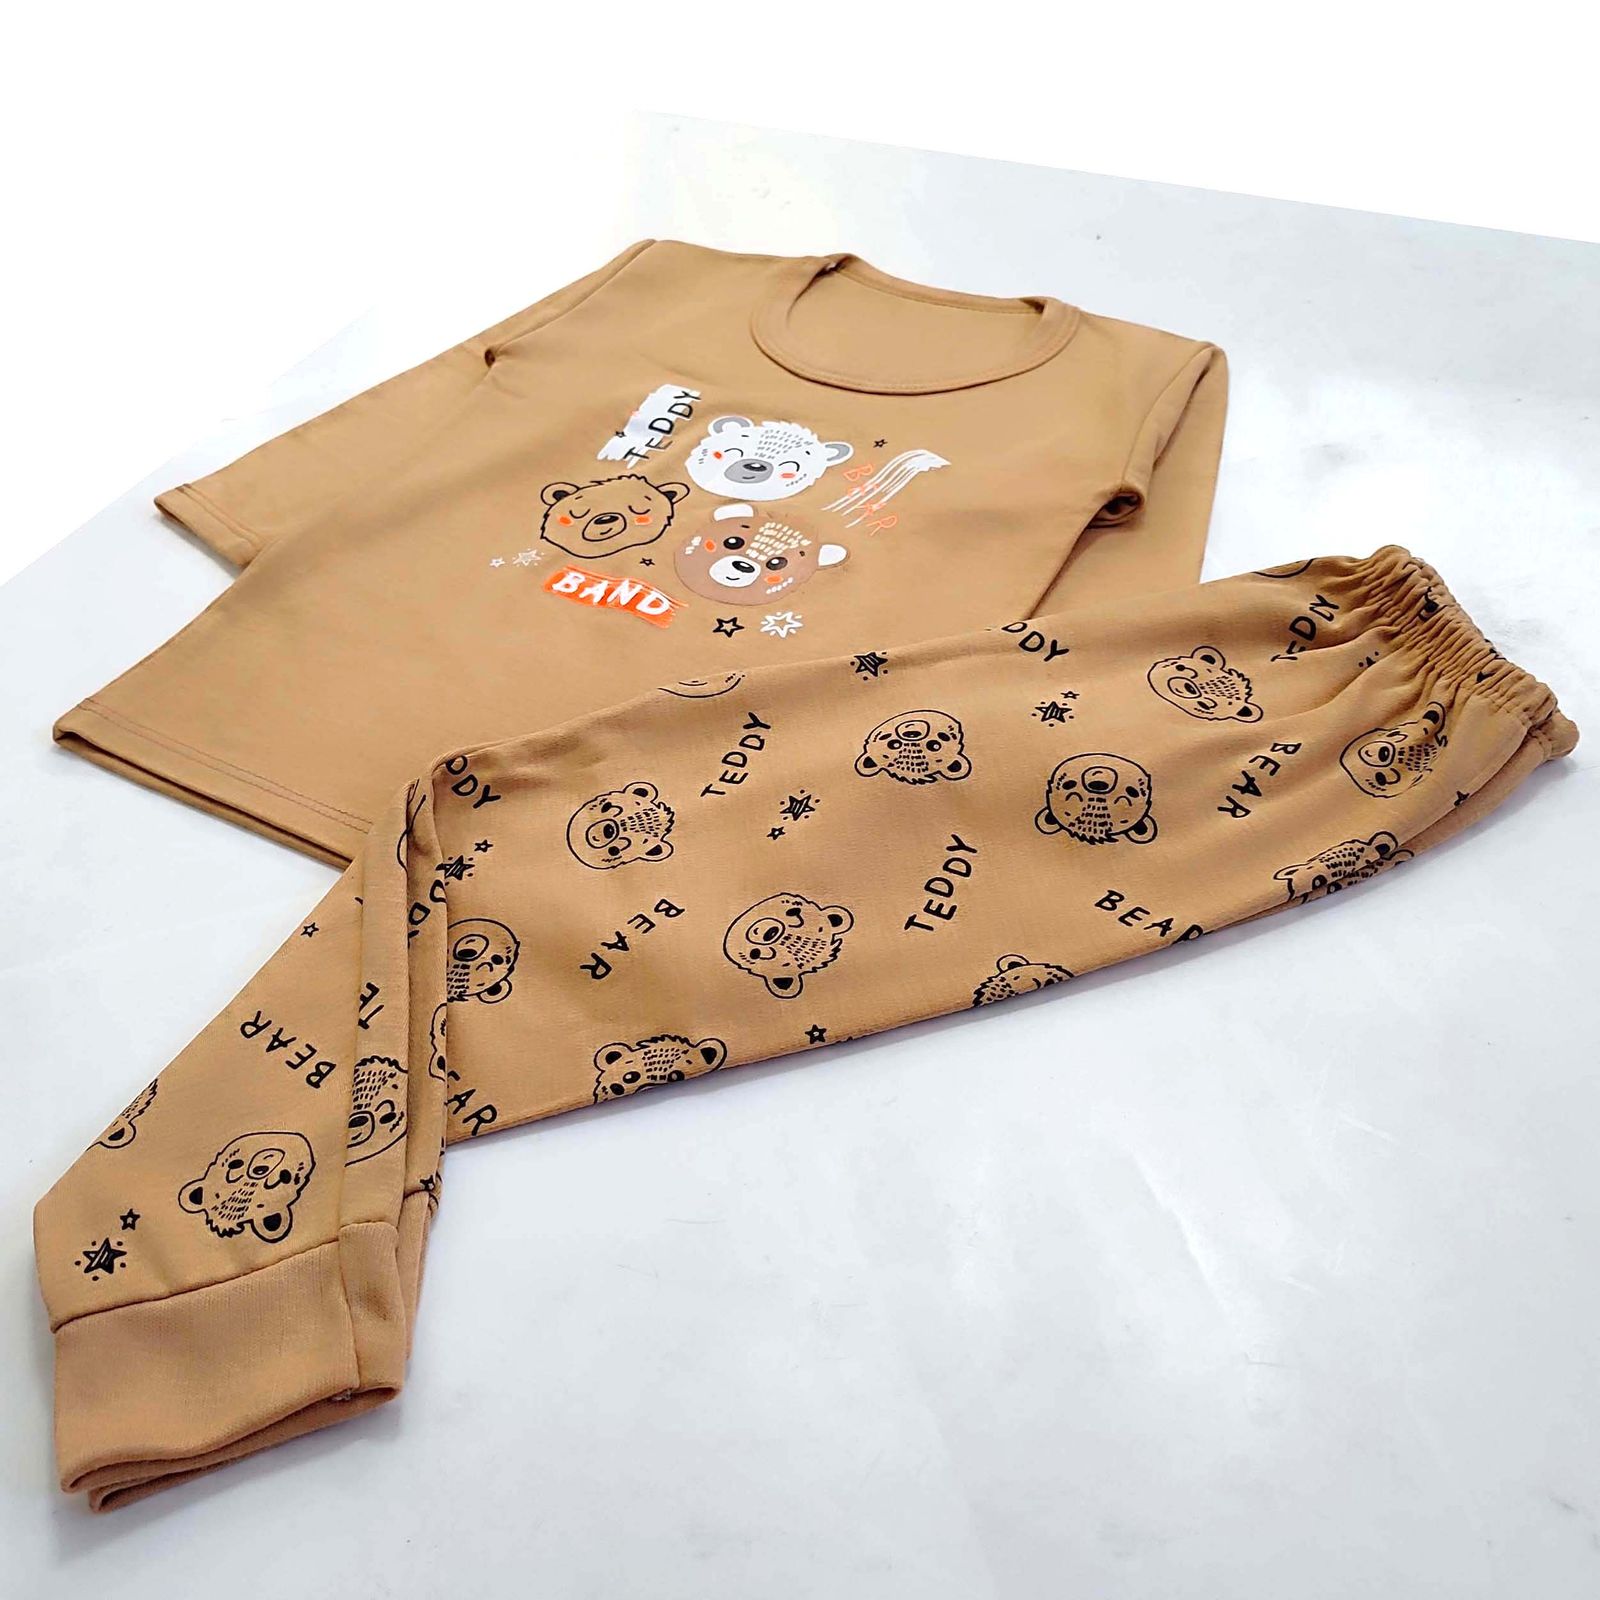 ست تی شرت و شلوار نوزادی مدل کله خرس کد 3927 رنگ نسکافه ای -  - 5